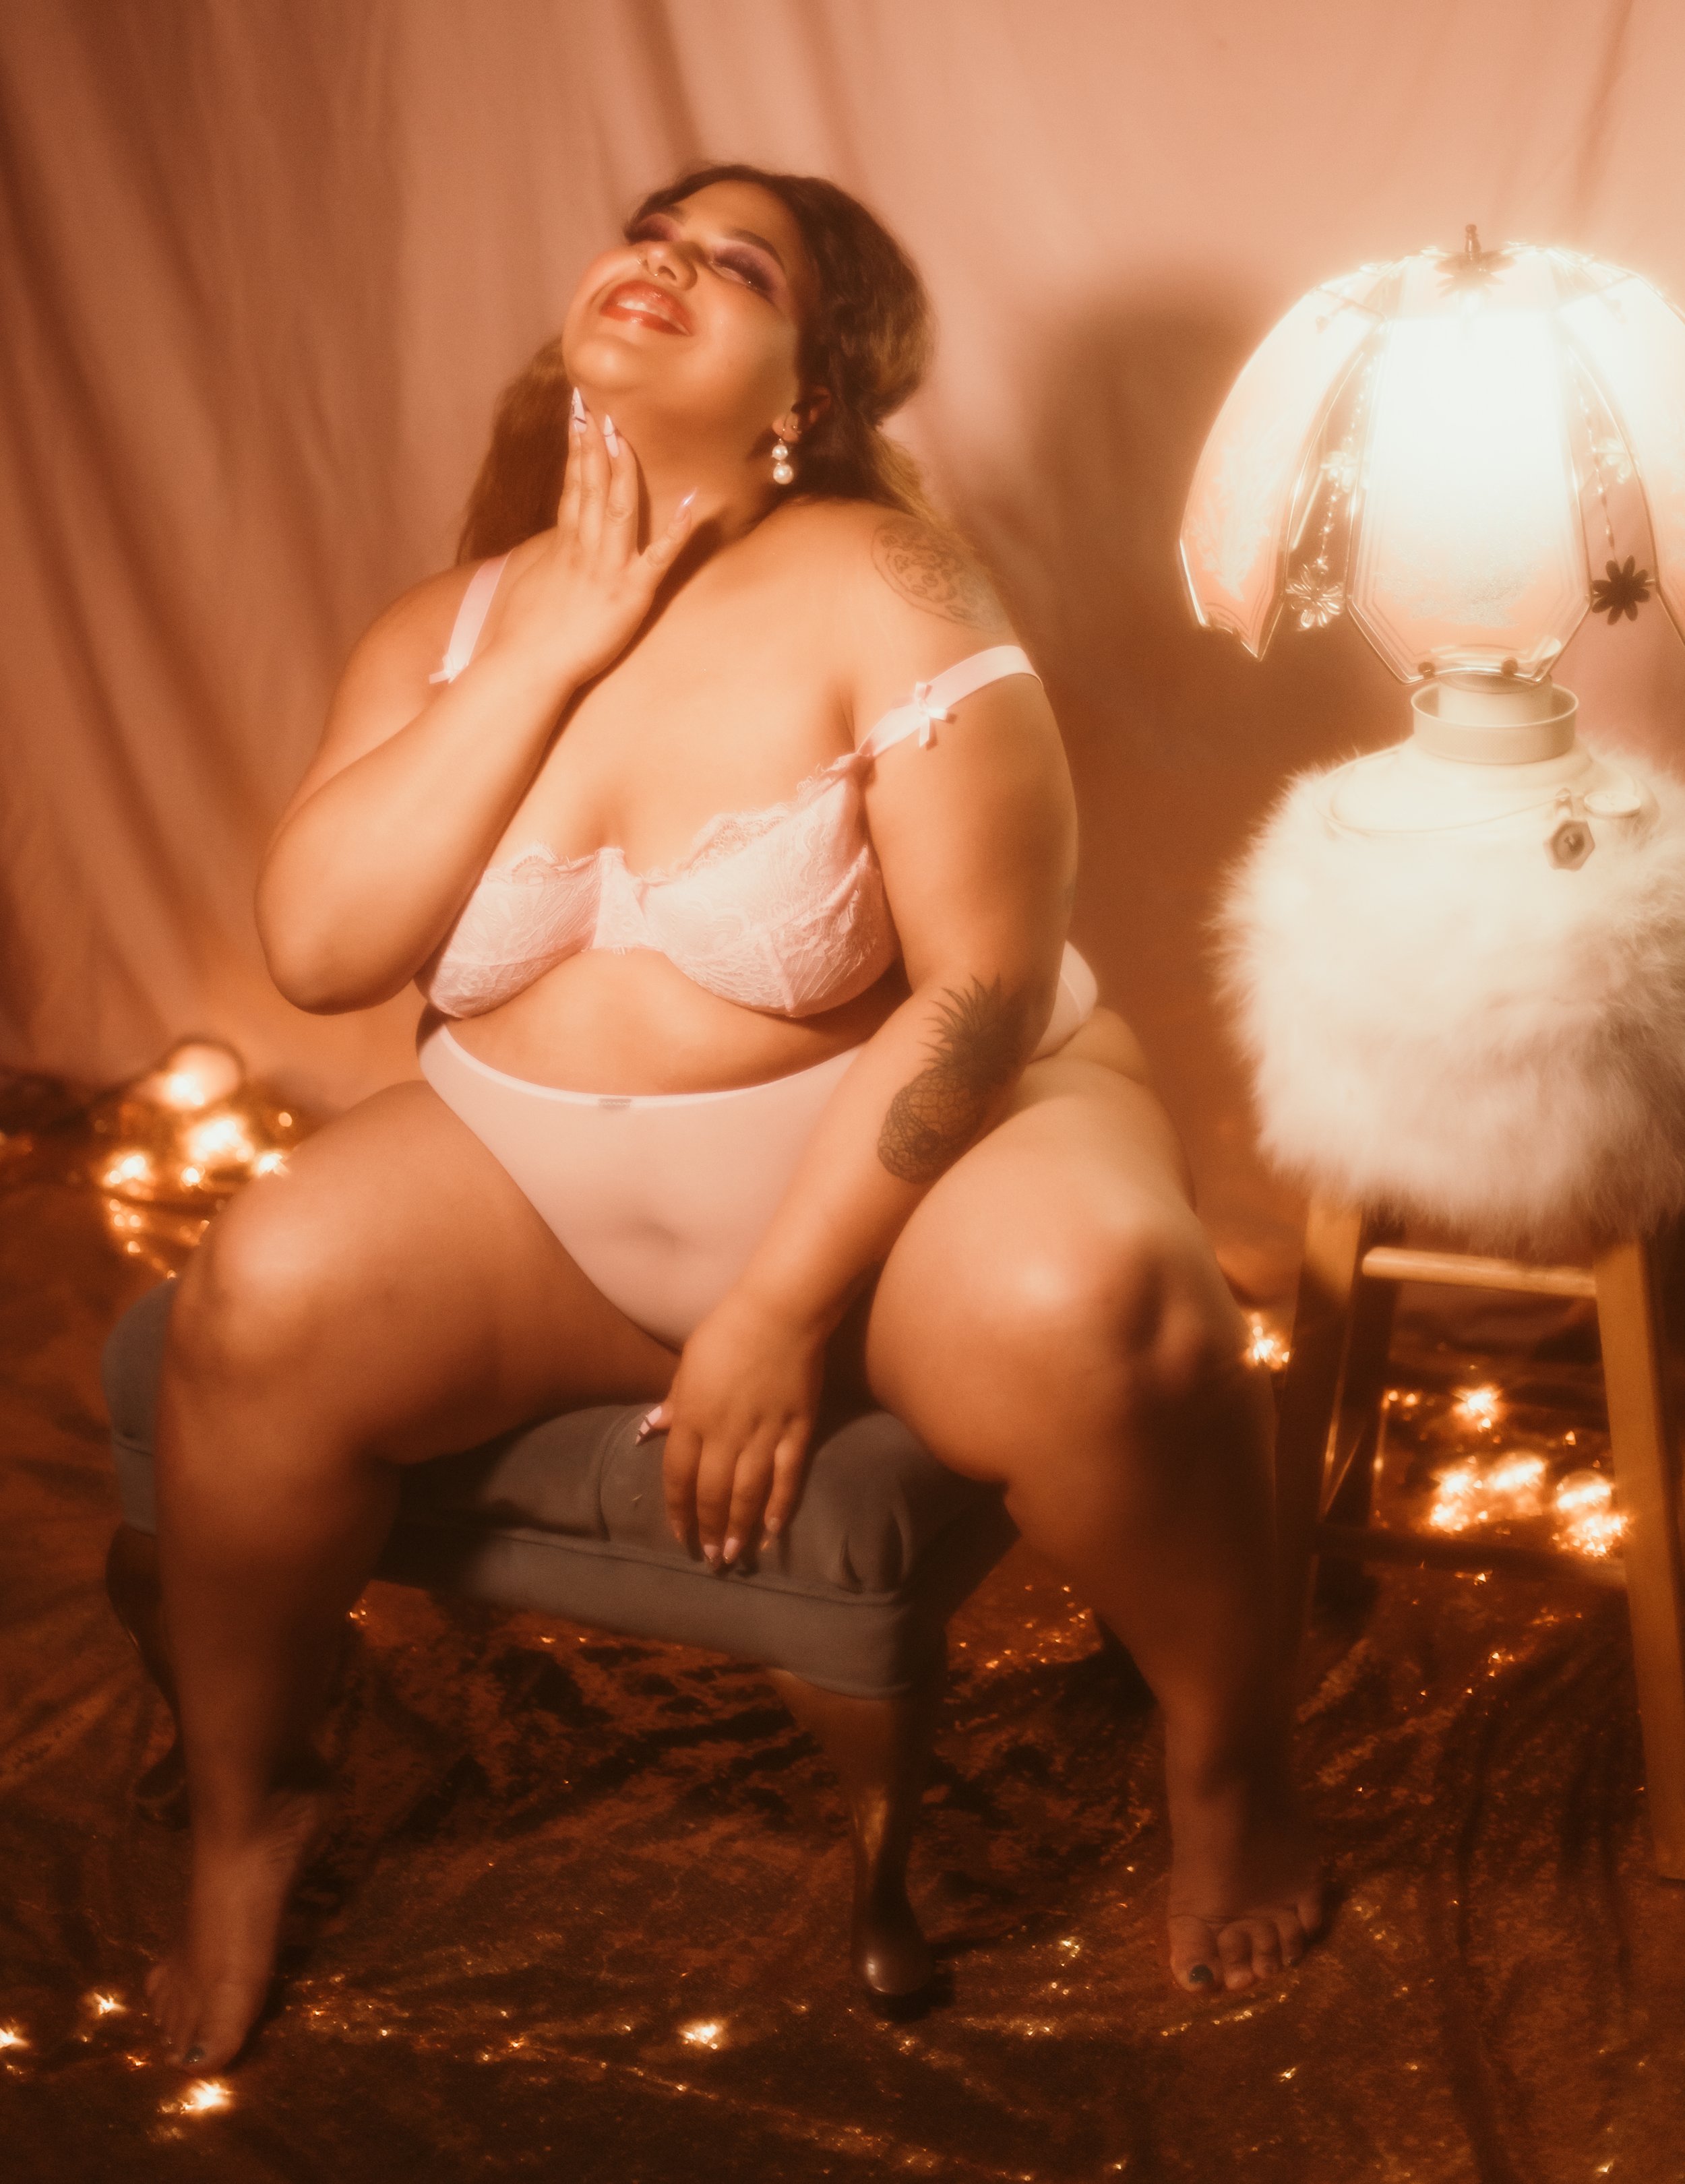 denton boudoir photography-fleshandfloraphotos.com-6852.JPG